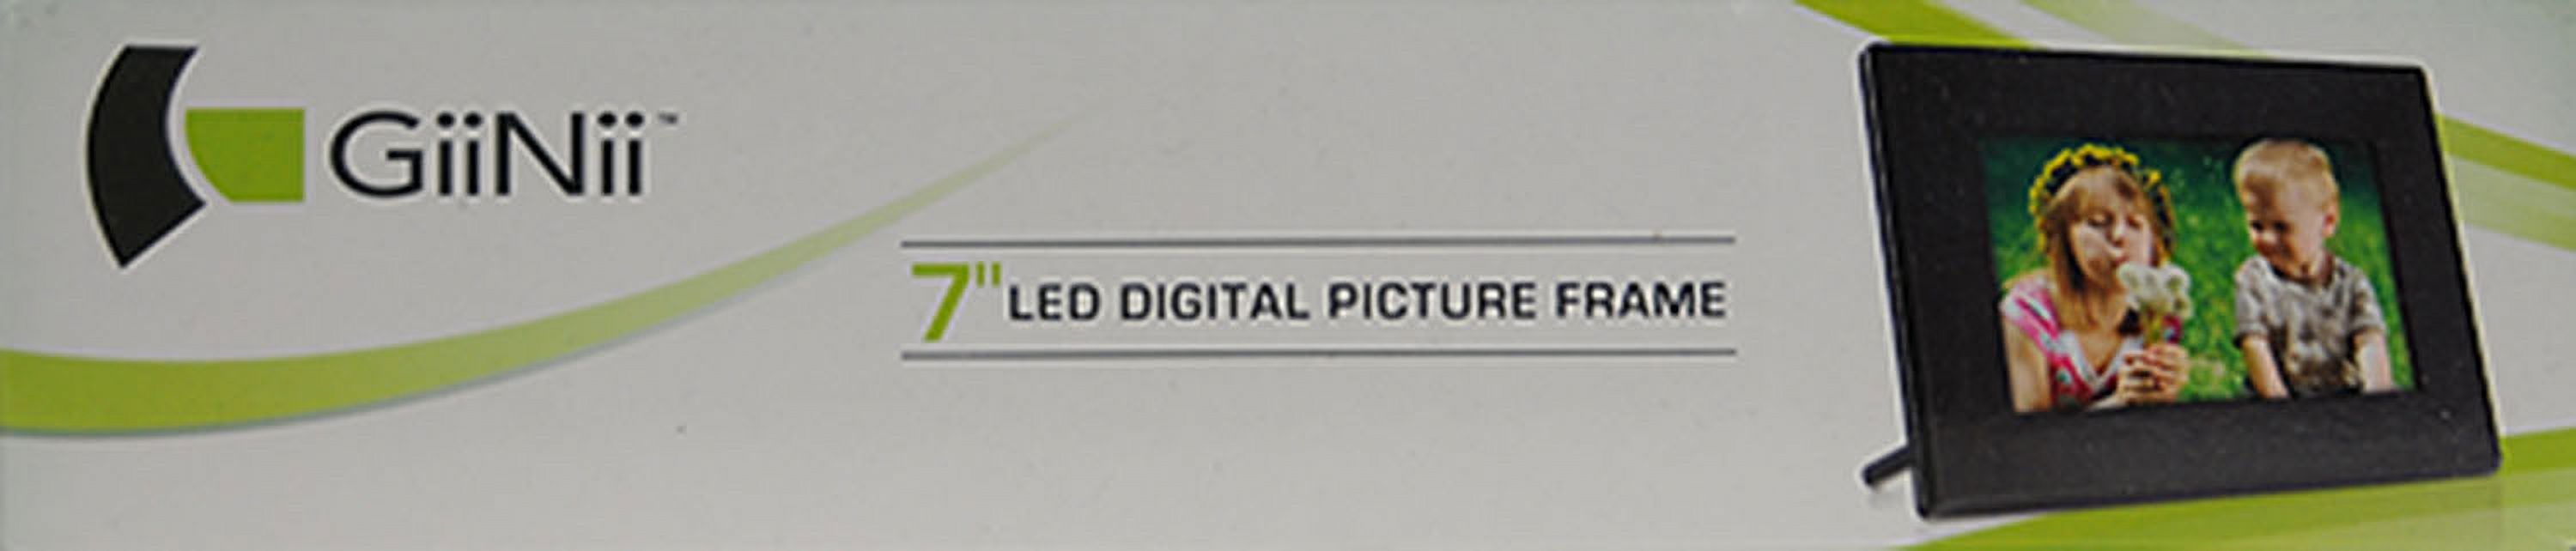 GiiNii GT-701P-1 Digital Frame - image 5 of 5